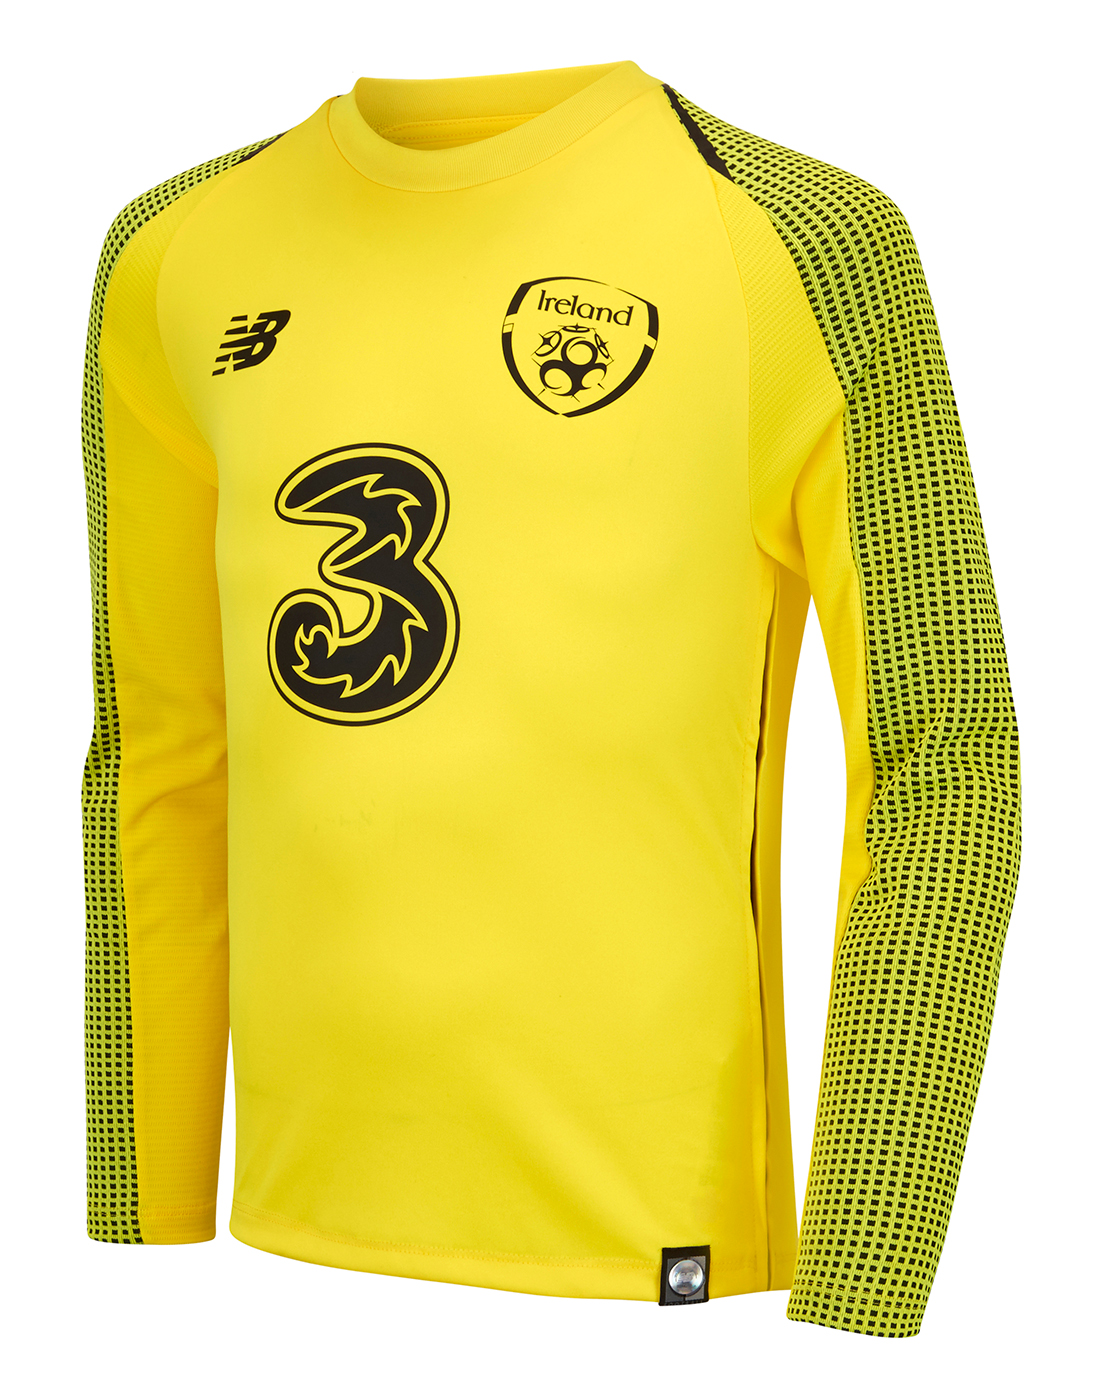 ireland goalkeeper jersey